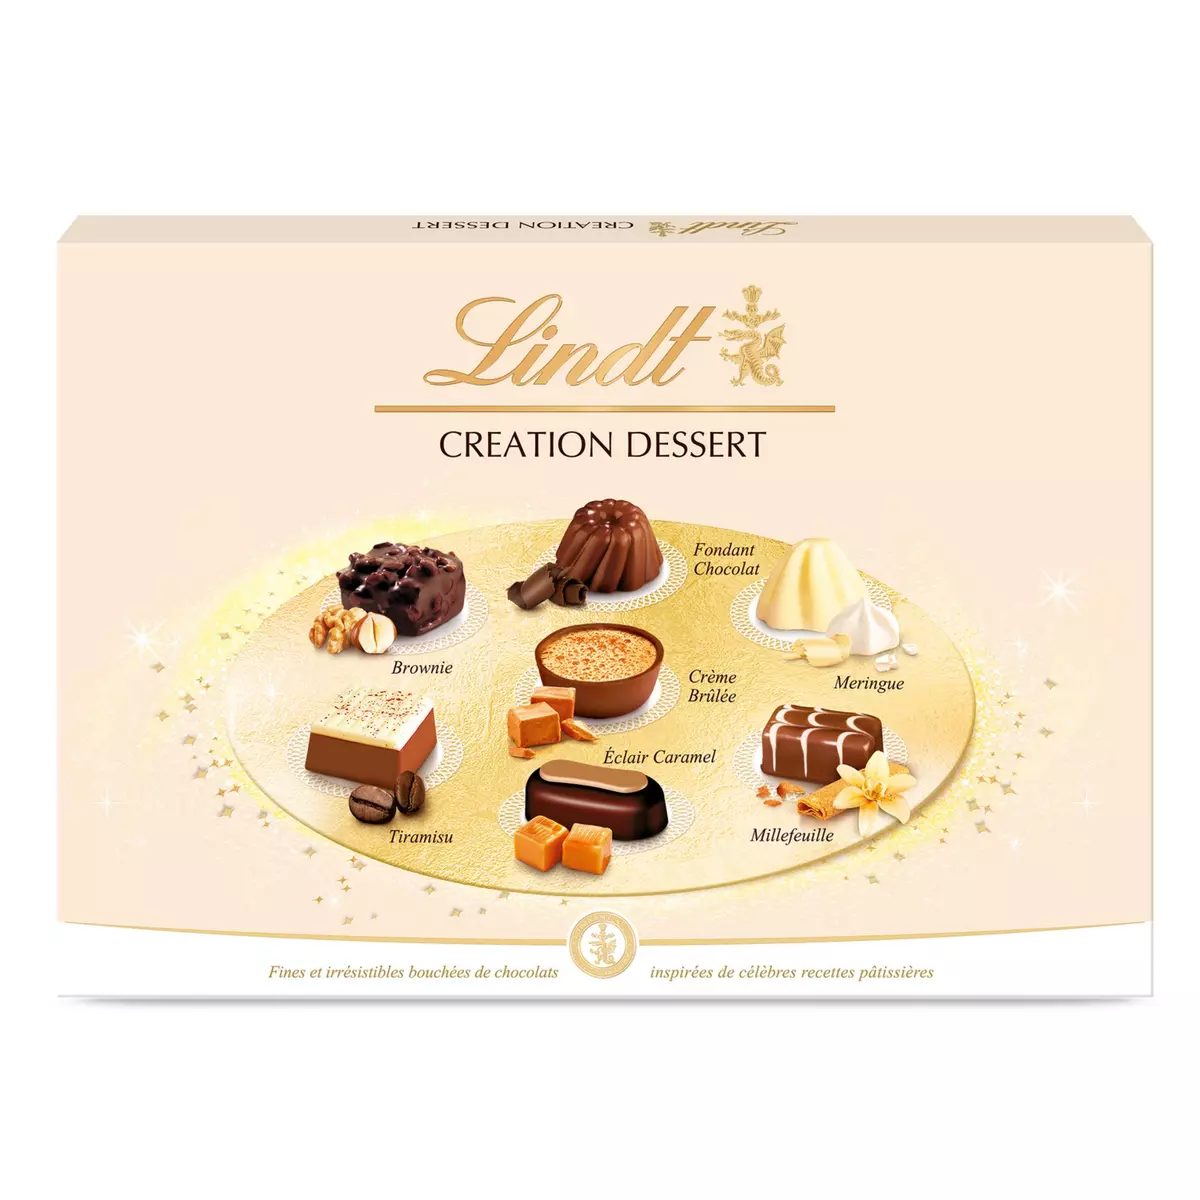 Chocolates Lindt Creation Petits Desserts 